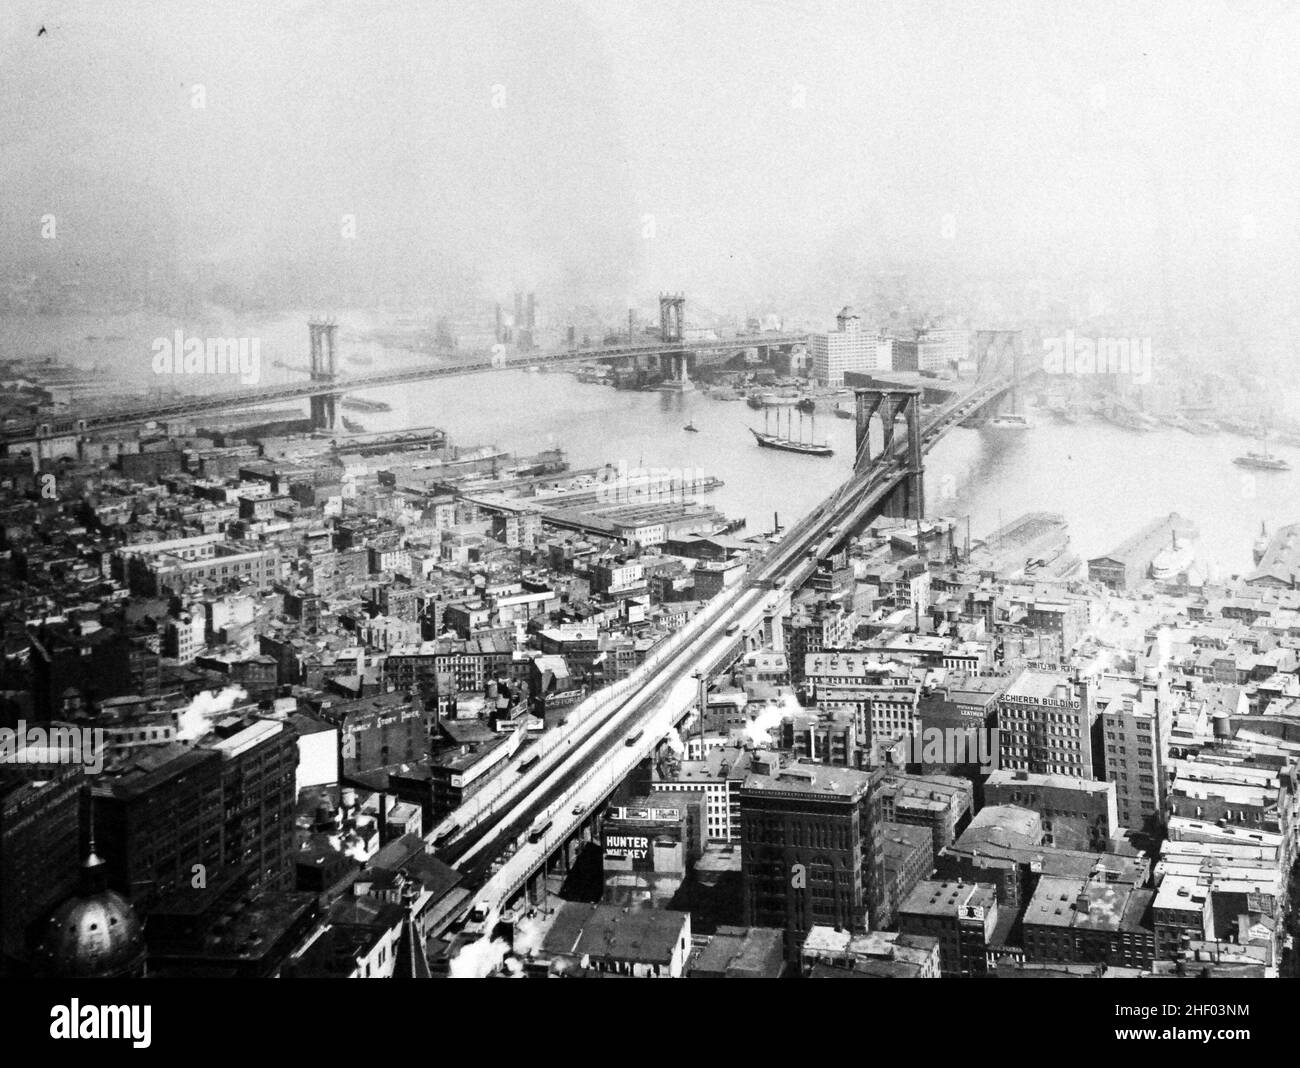 Brooklyn e Manhattan Bridge, New York City Skyline, New York, foto di Irving Underhill, 1916. Foto d'epoca di New York. Foto Stock